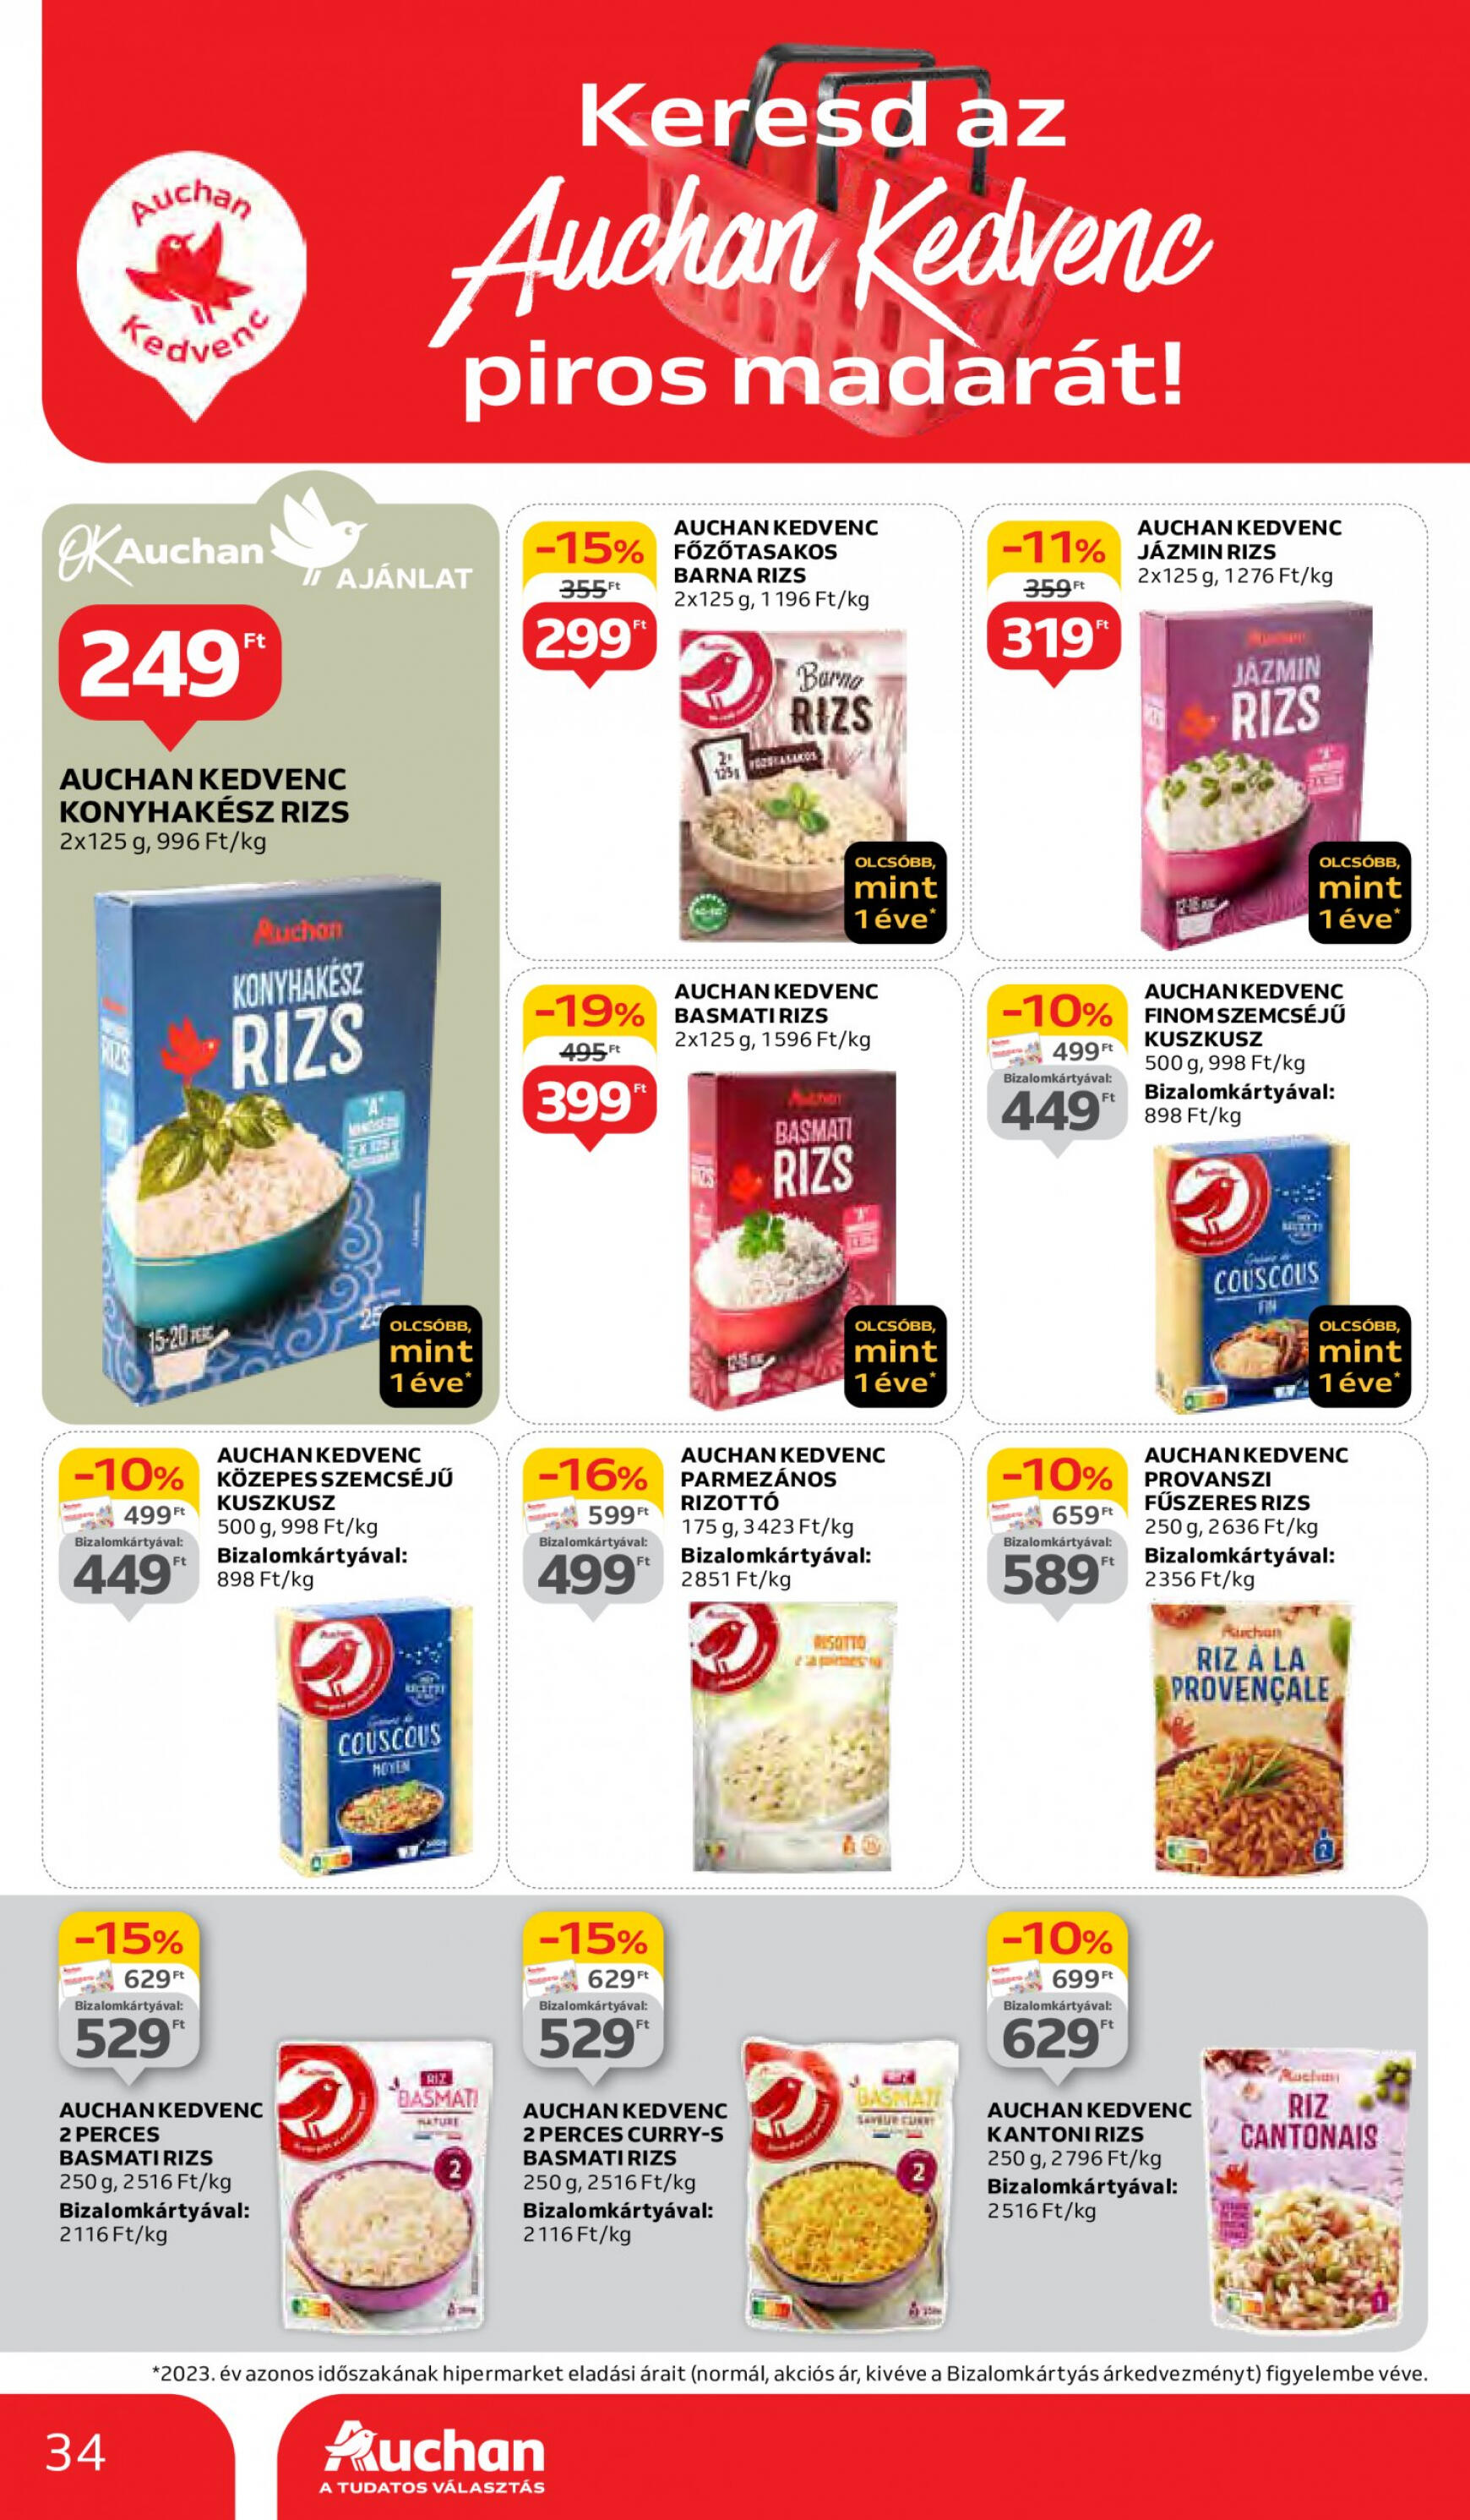 auchan - Aktuális újság Auchan 05.02. - 05.08. - page: 34